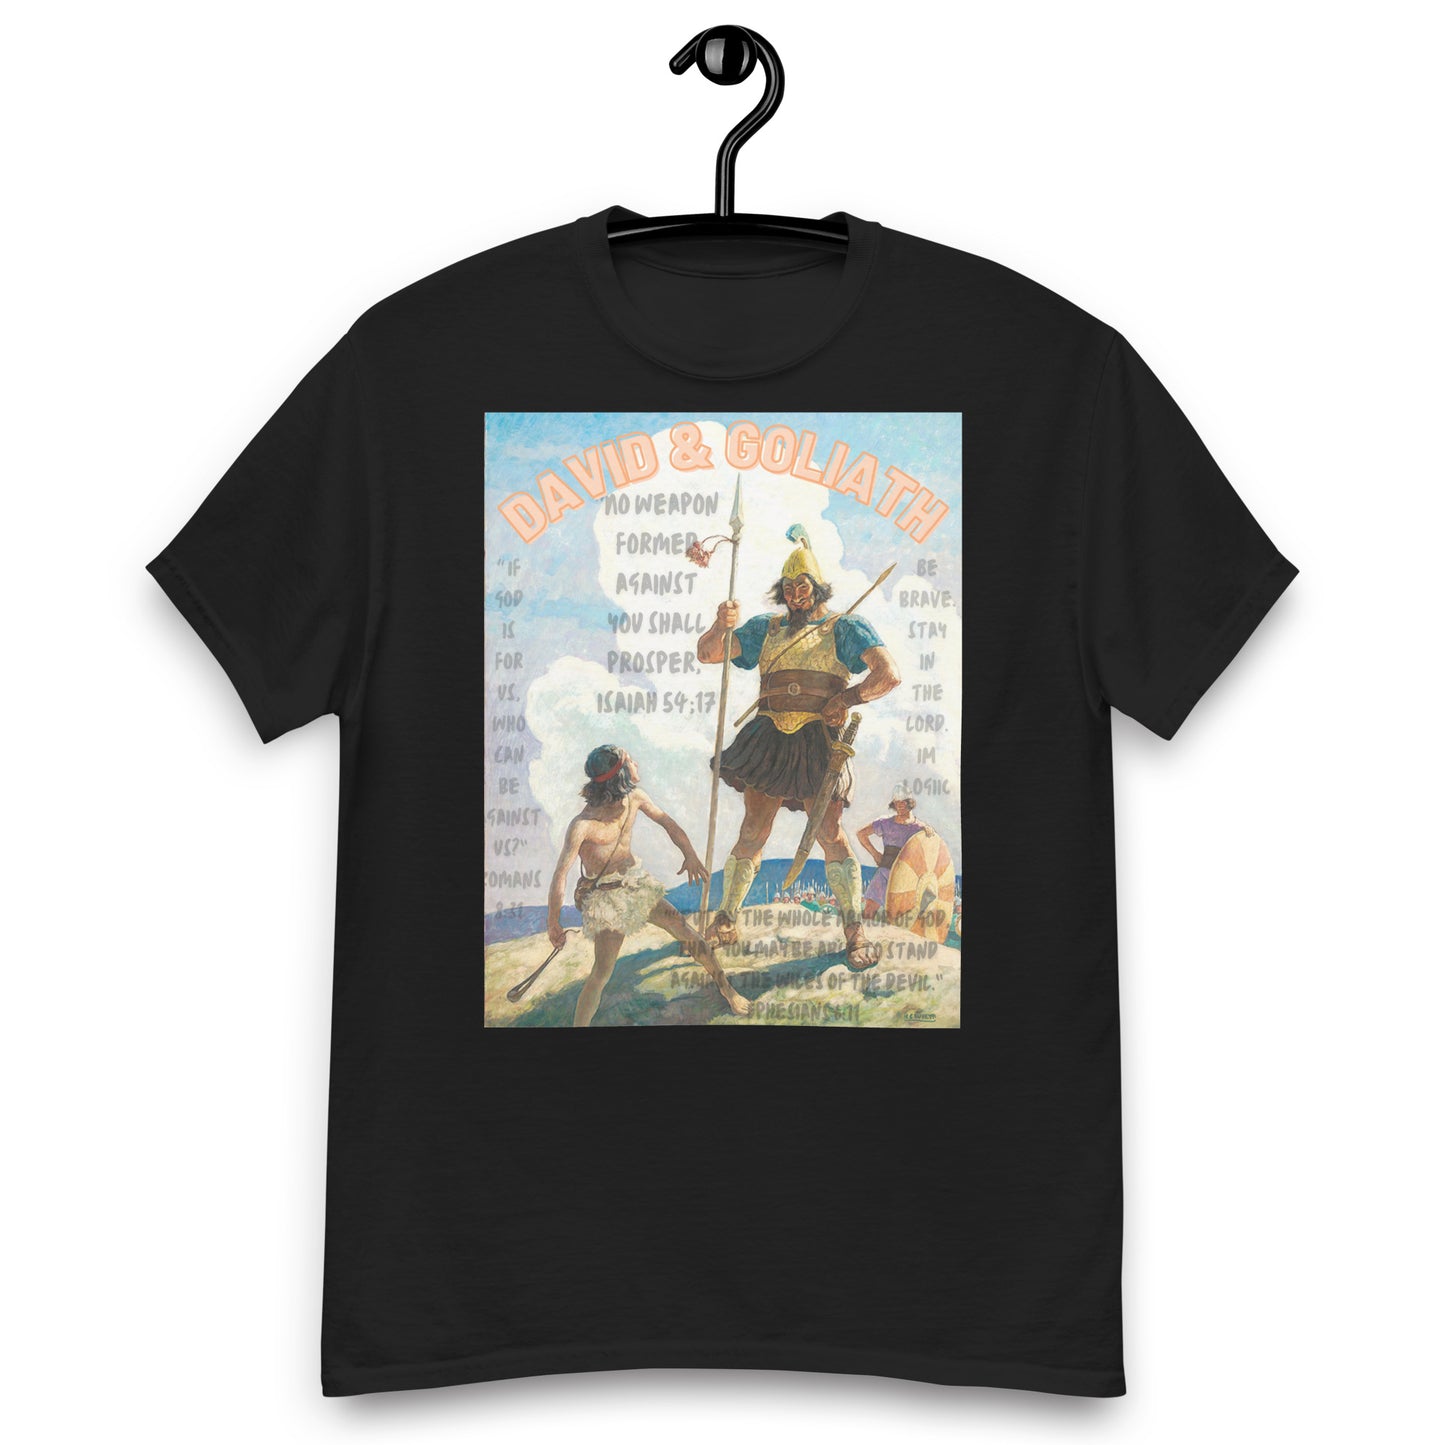 David & Goliath T-shirt - Shirts & Tops